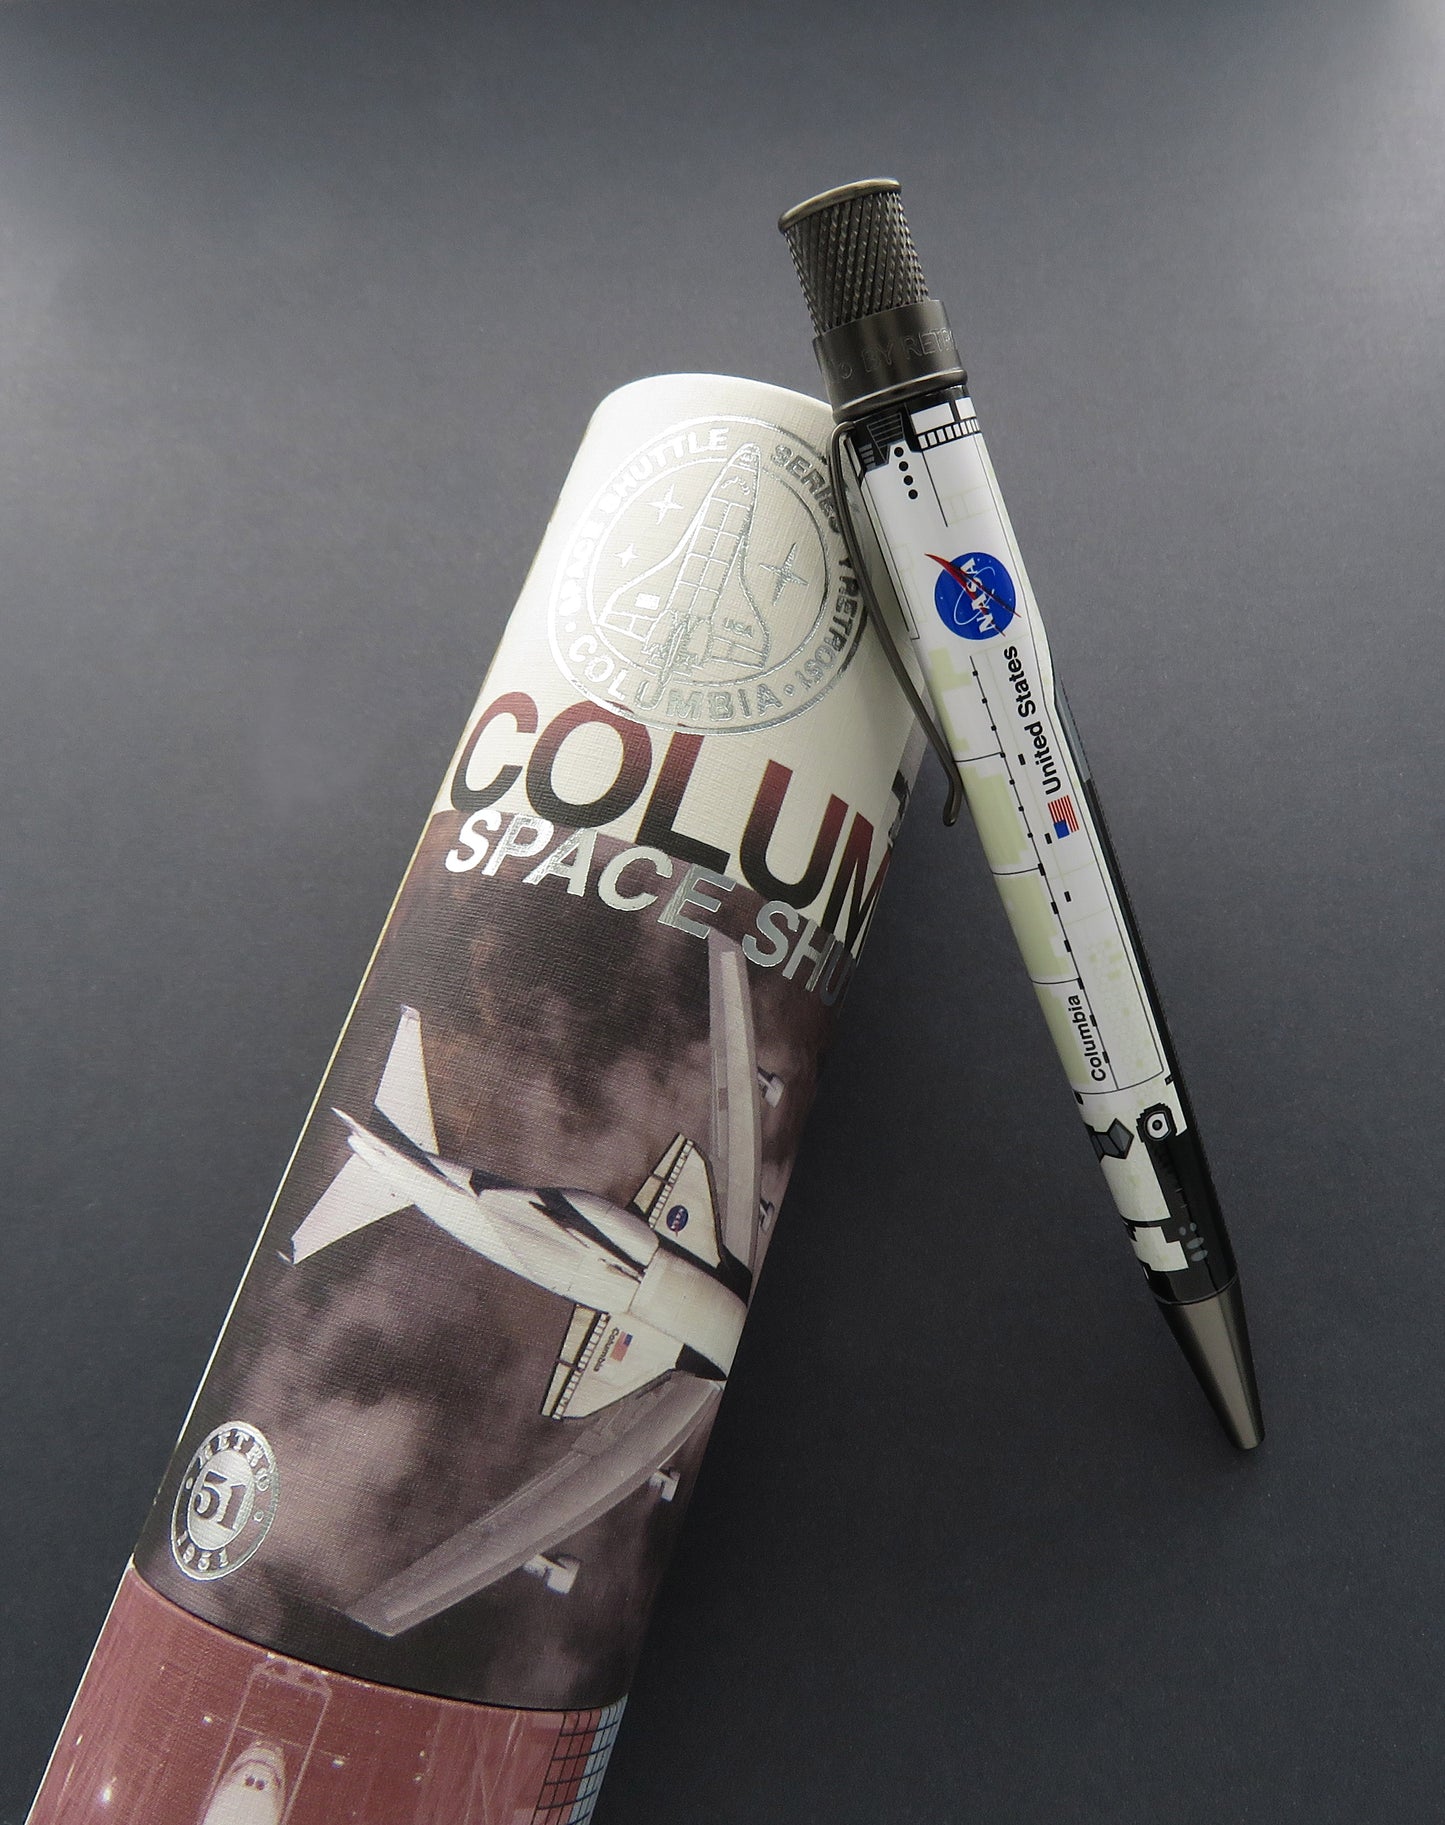 Retro 51 Tornado Rollerball Pen - Columbia Space Shuttle (Limited Edition)